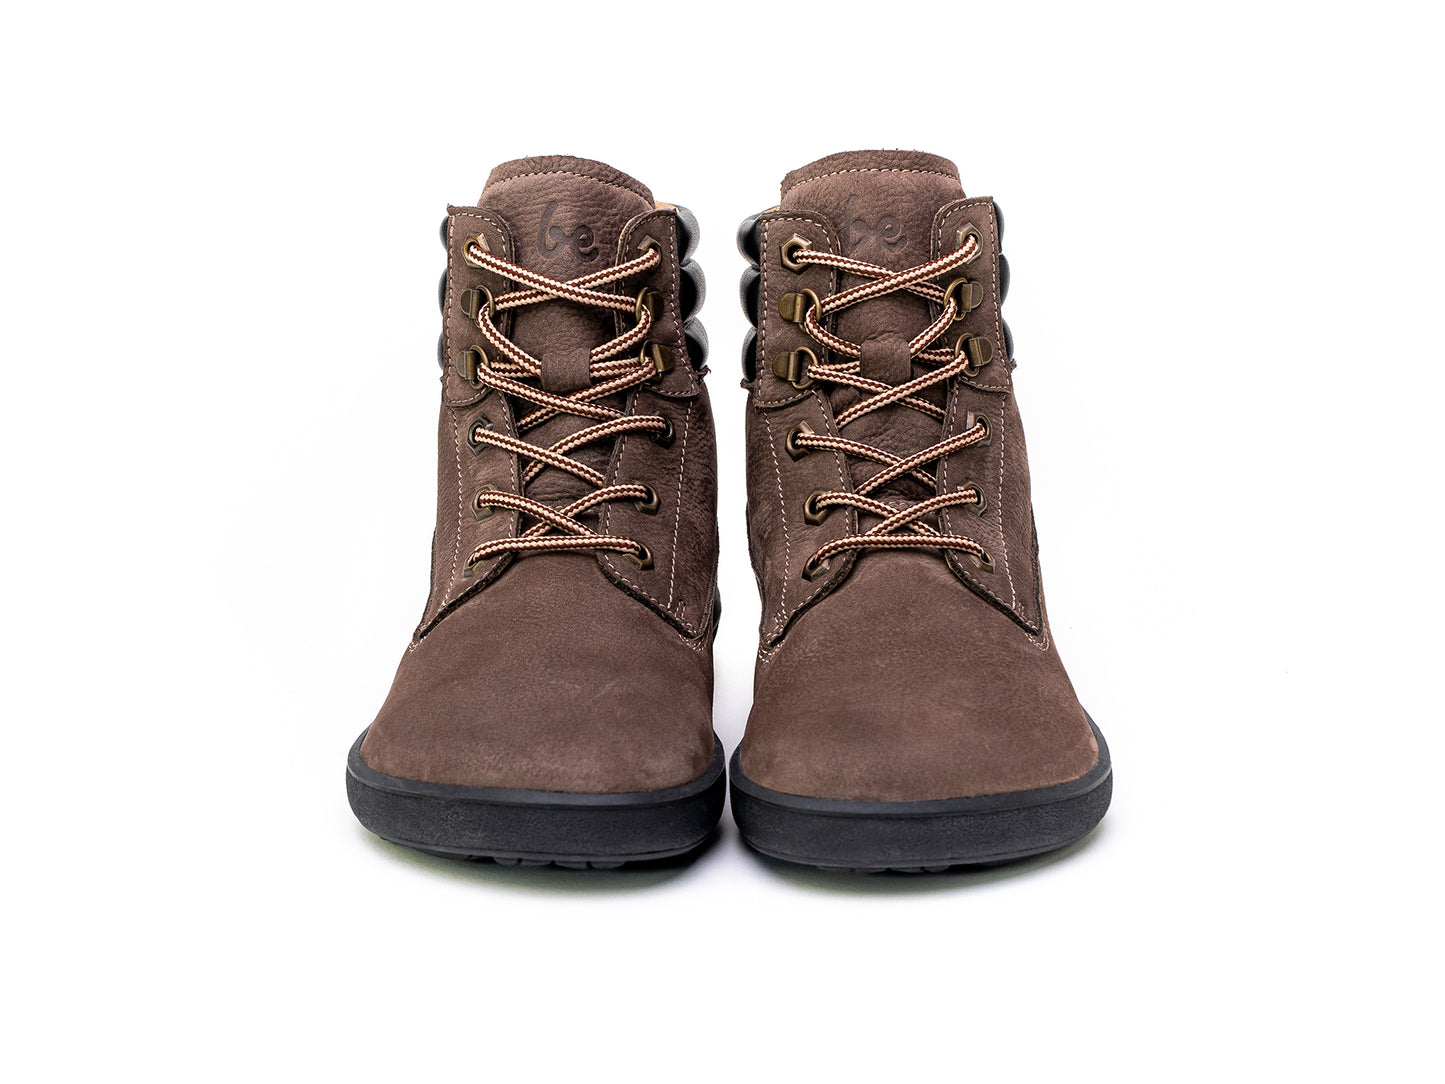 Be Lenka Nevada Neo Barefoot Boots - Chocolate